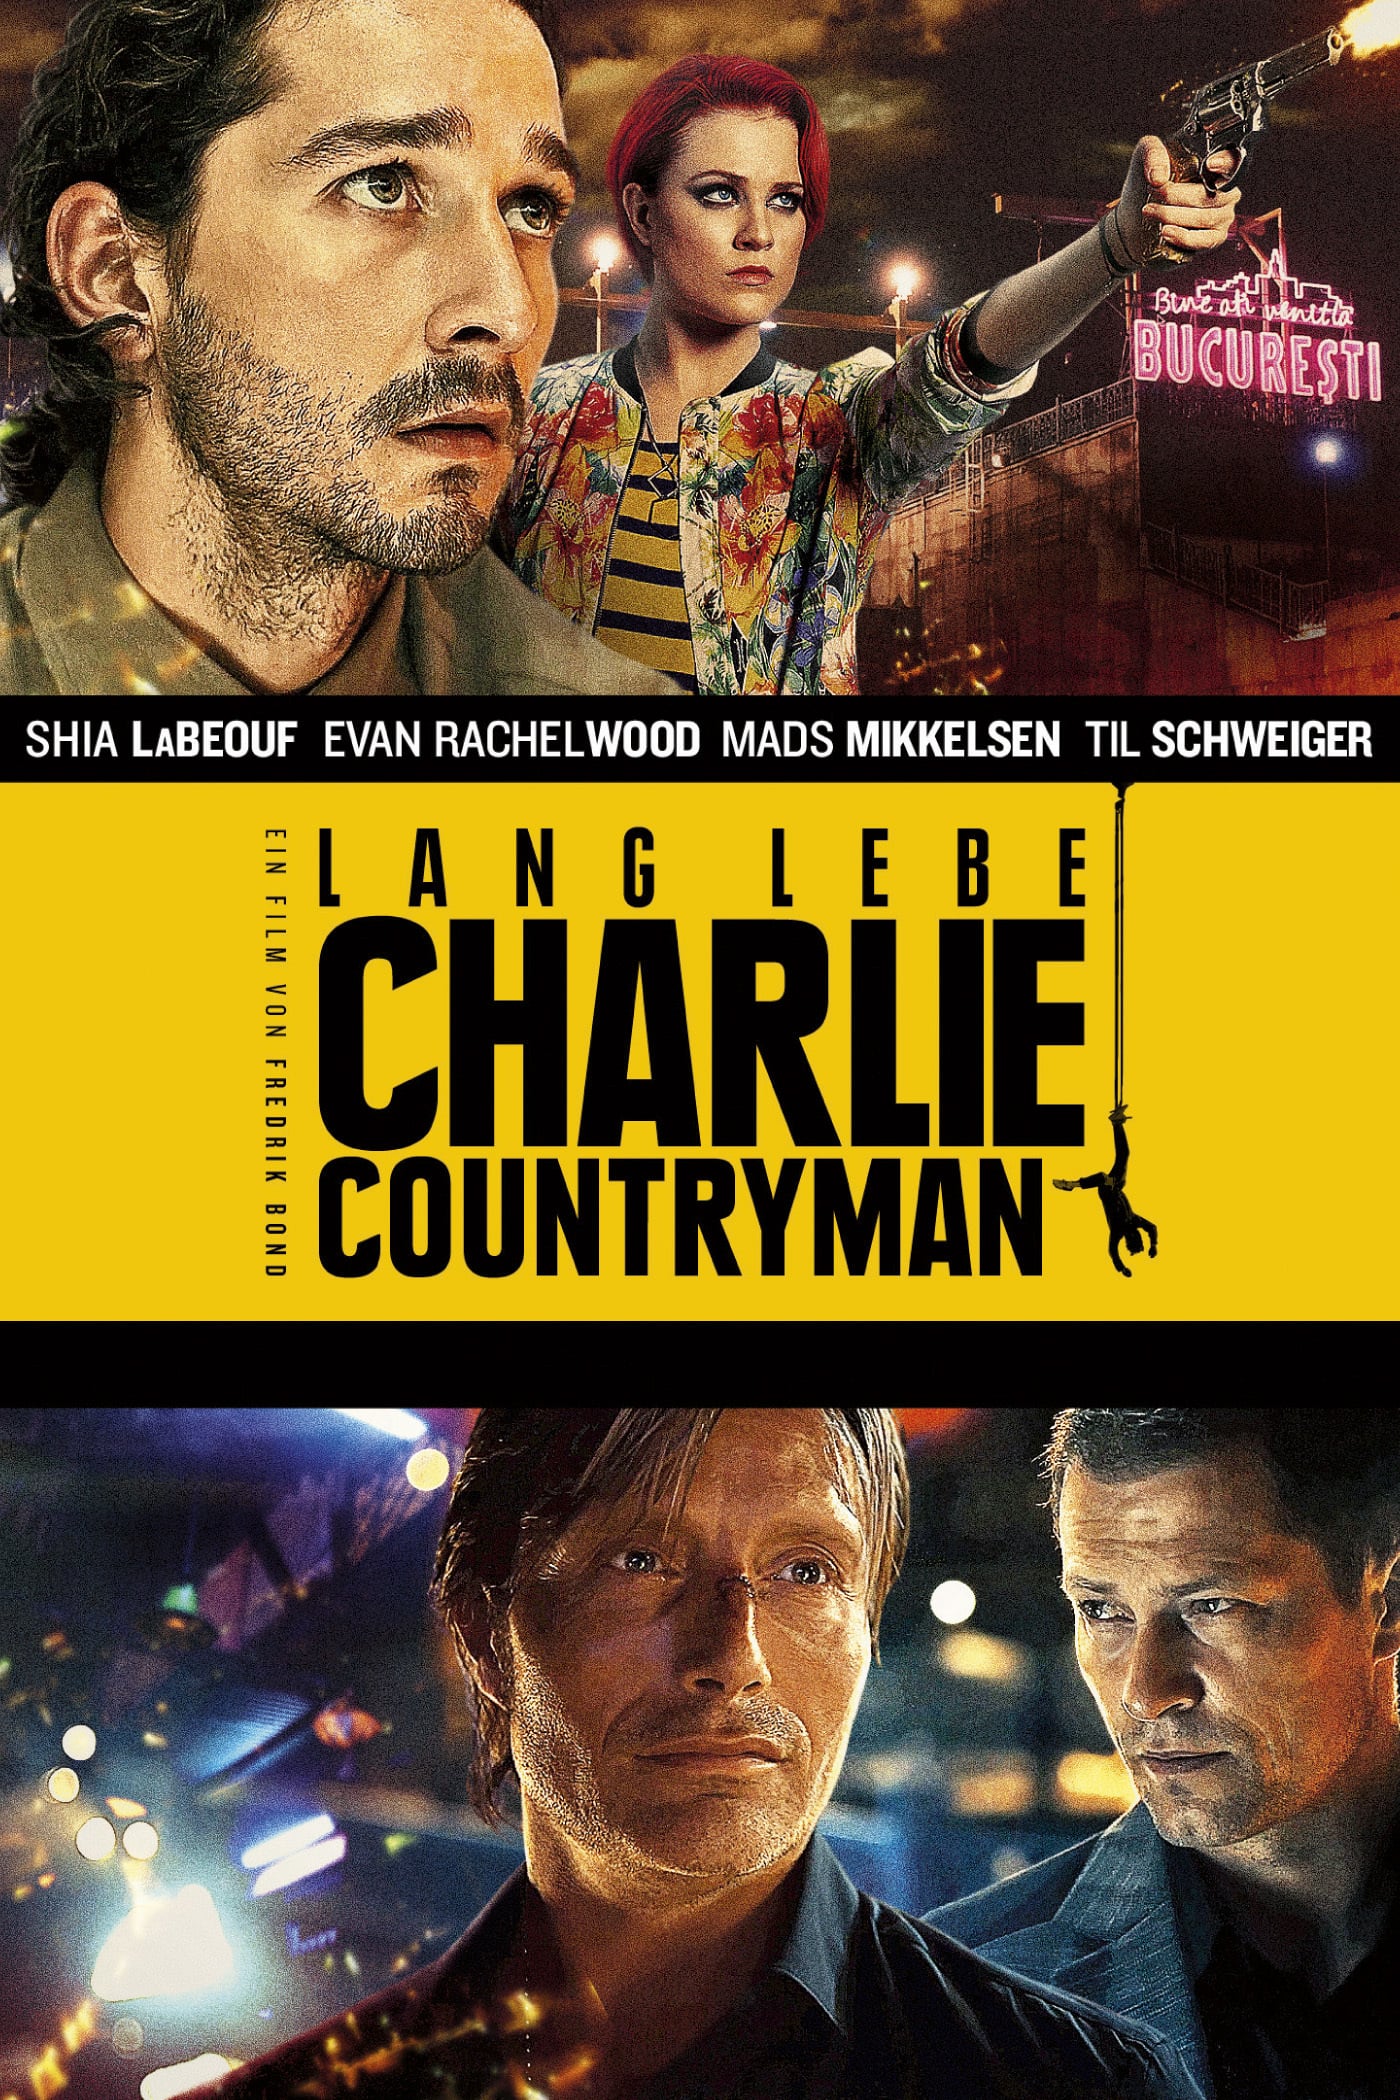 Plakat von "Lang lebe Charlie Countryman"